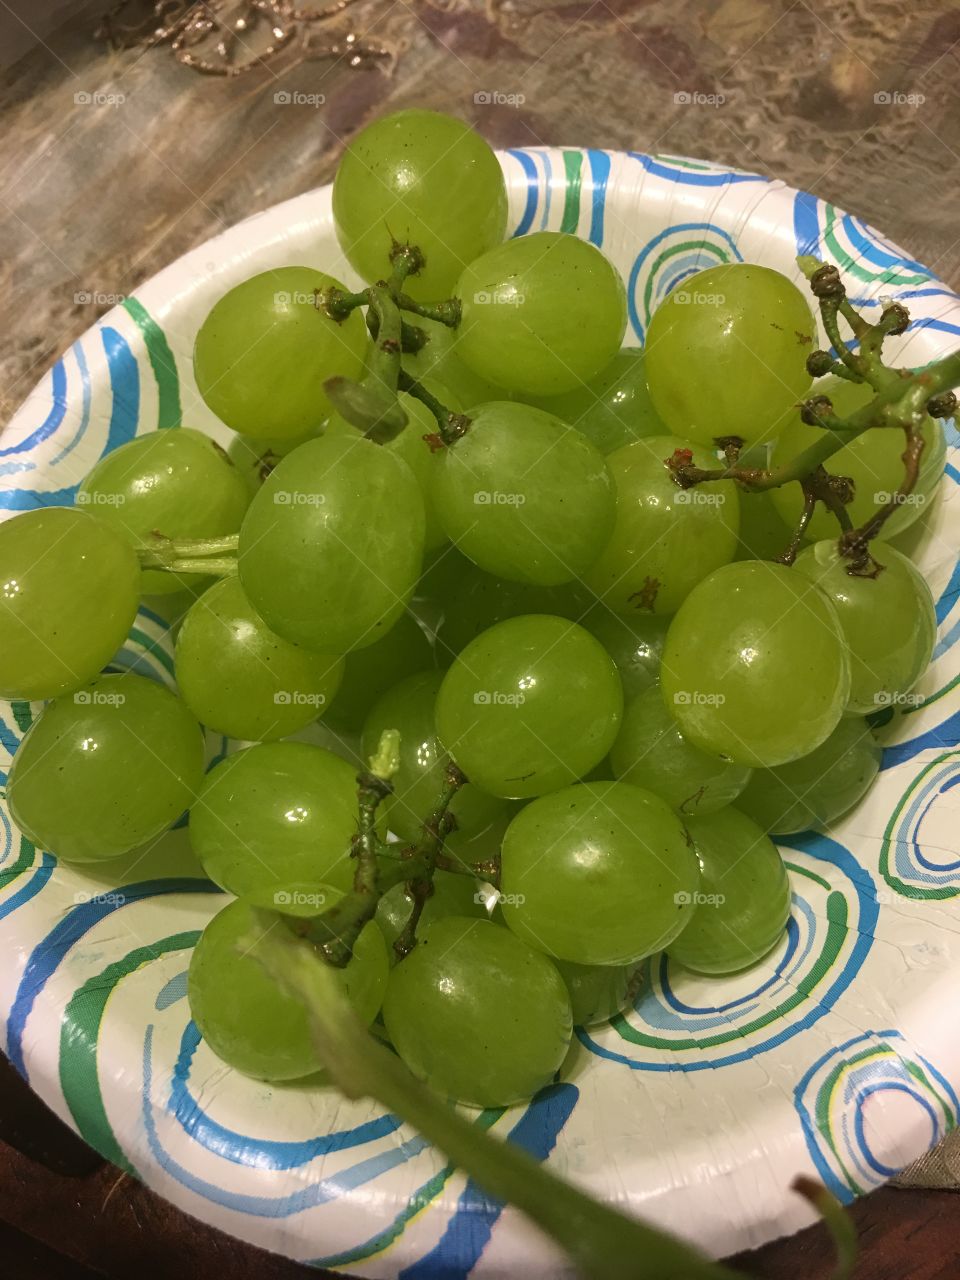 Grapes Galore